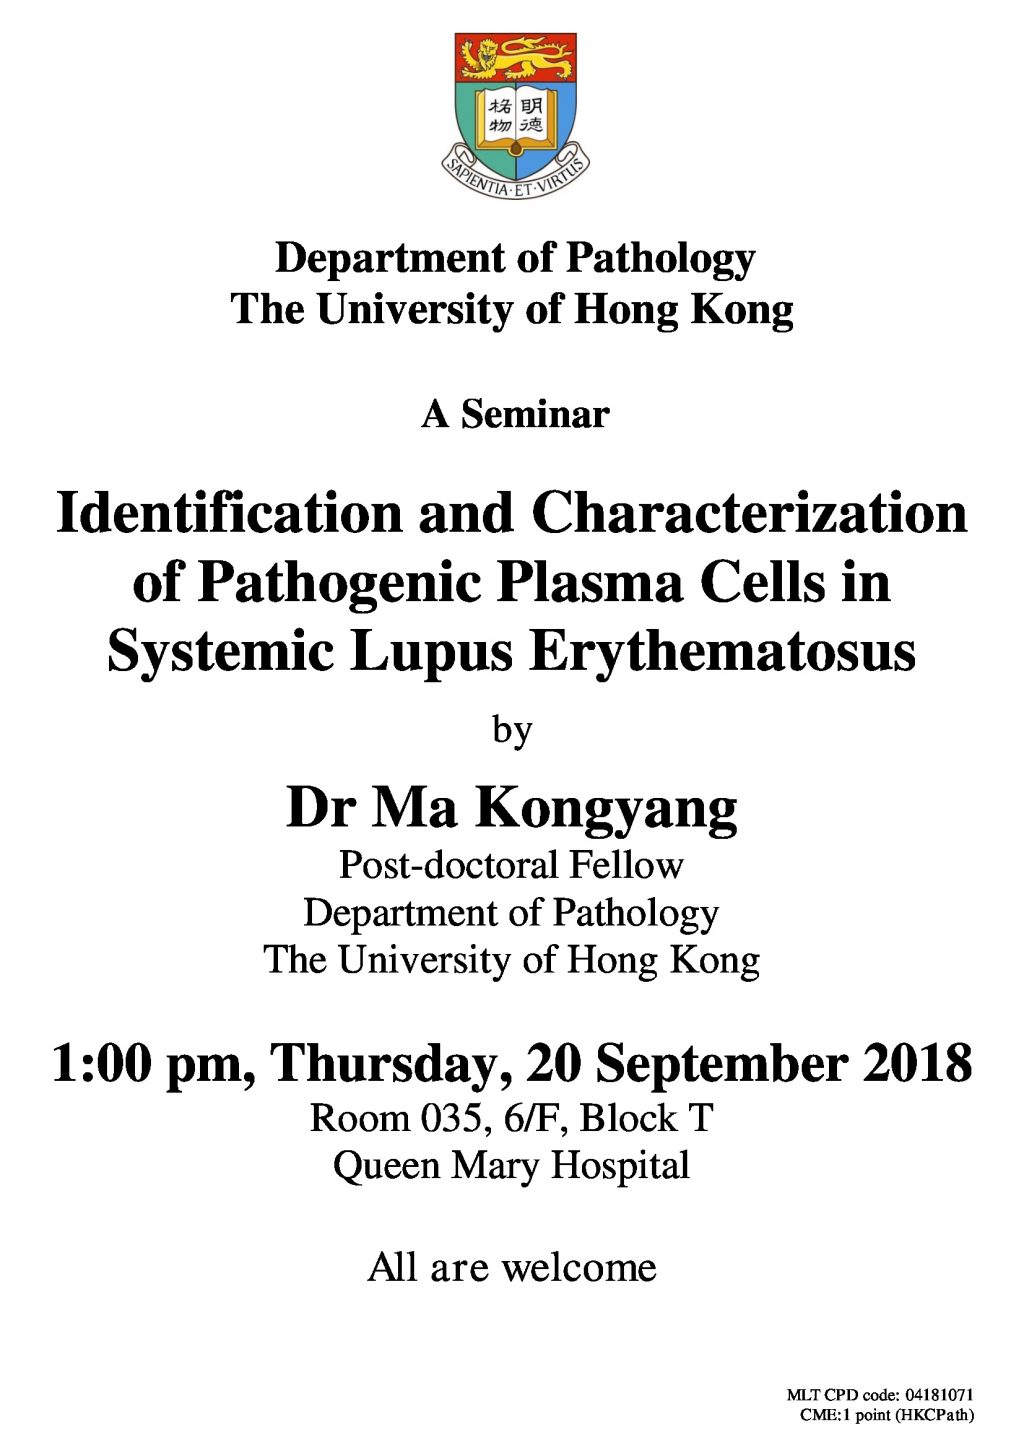 A Seminar by Dr Ma Kongyang on Sep 20 (1 pm)